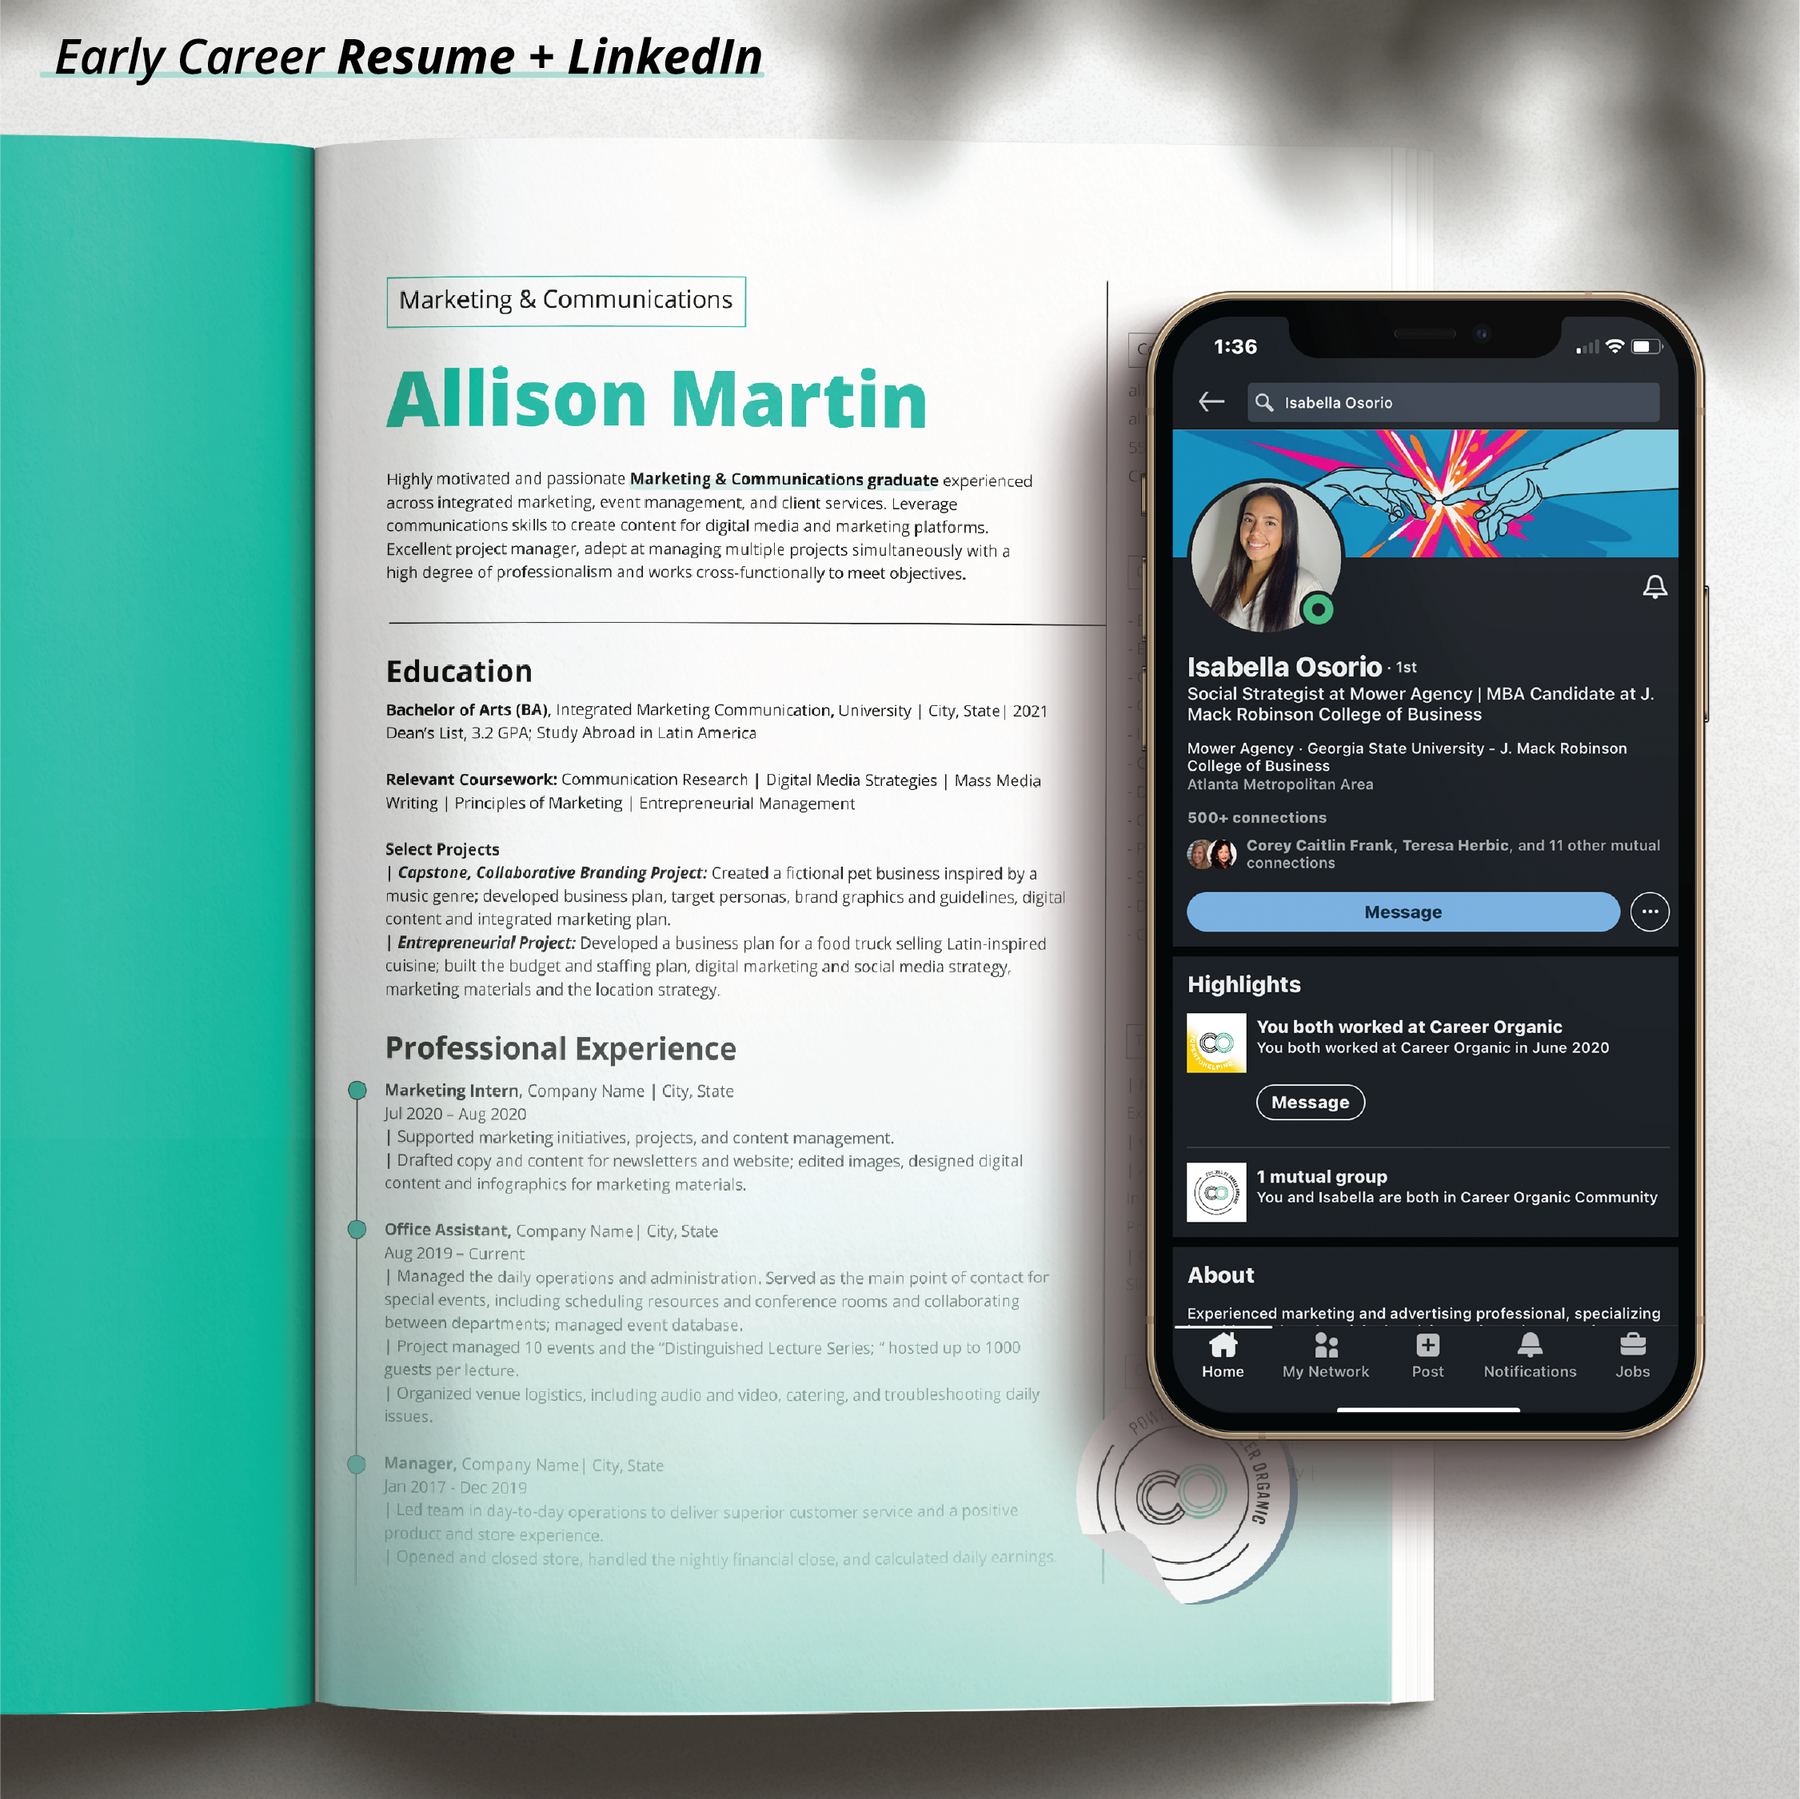 Early Career Resume + LinkedIn